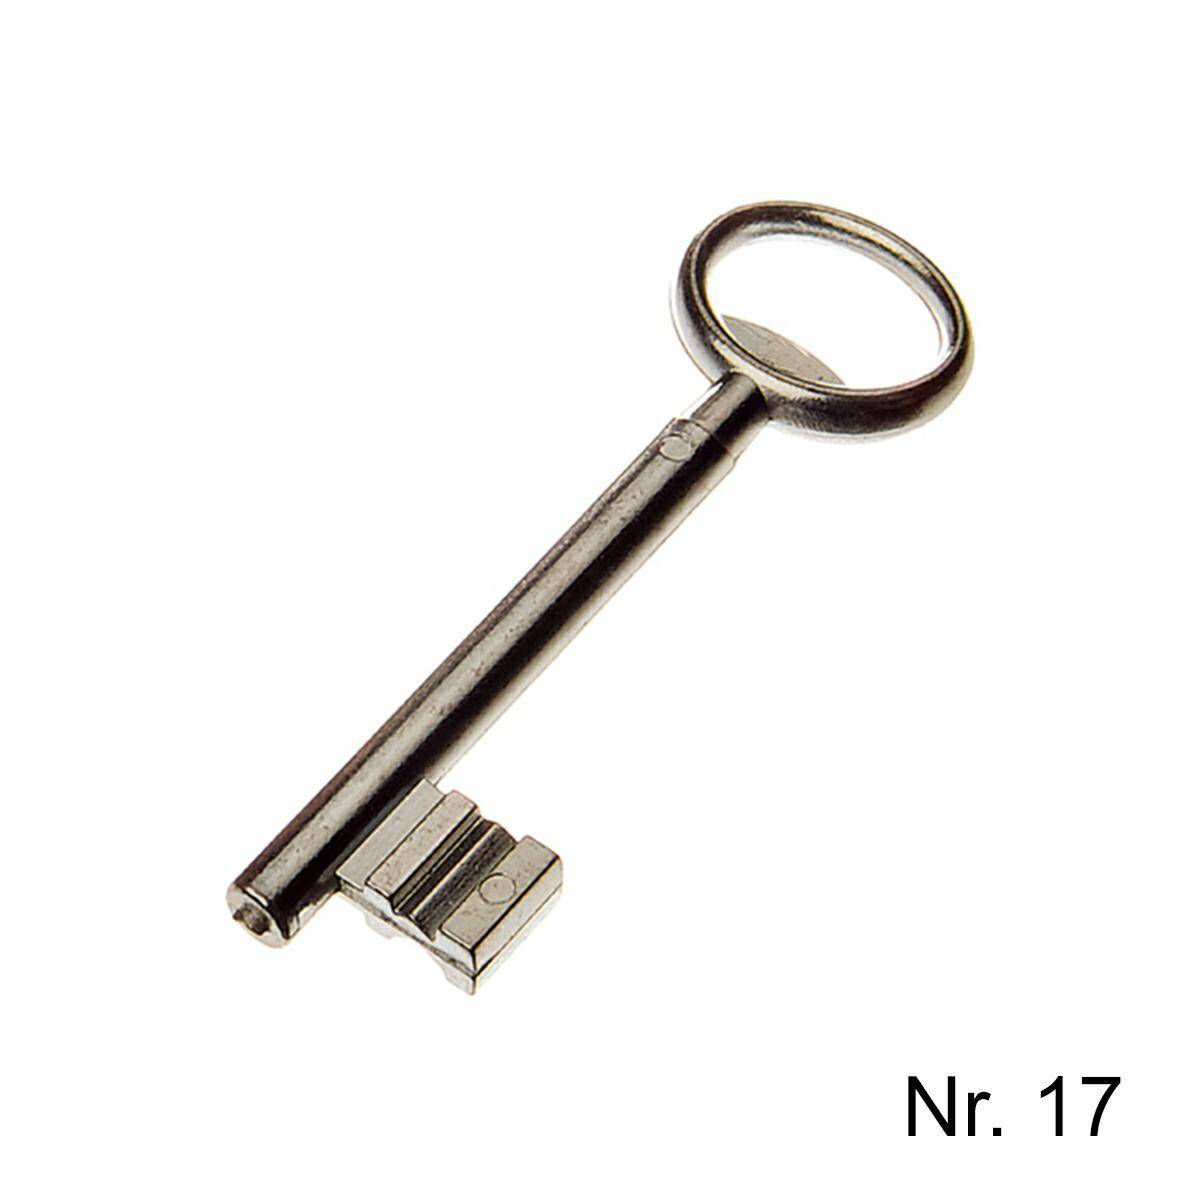 Cast key Jania for the lock - No. 17